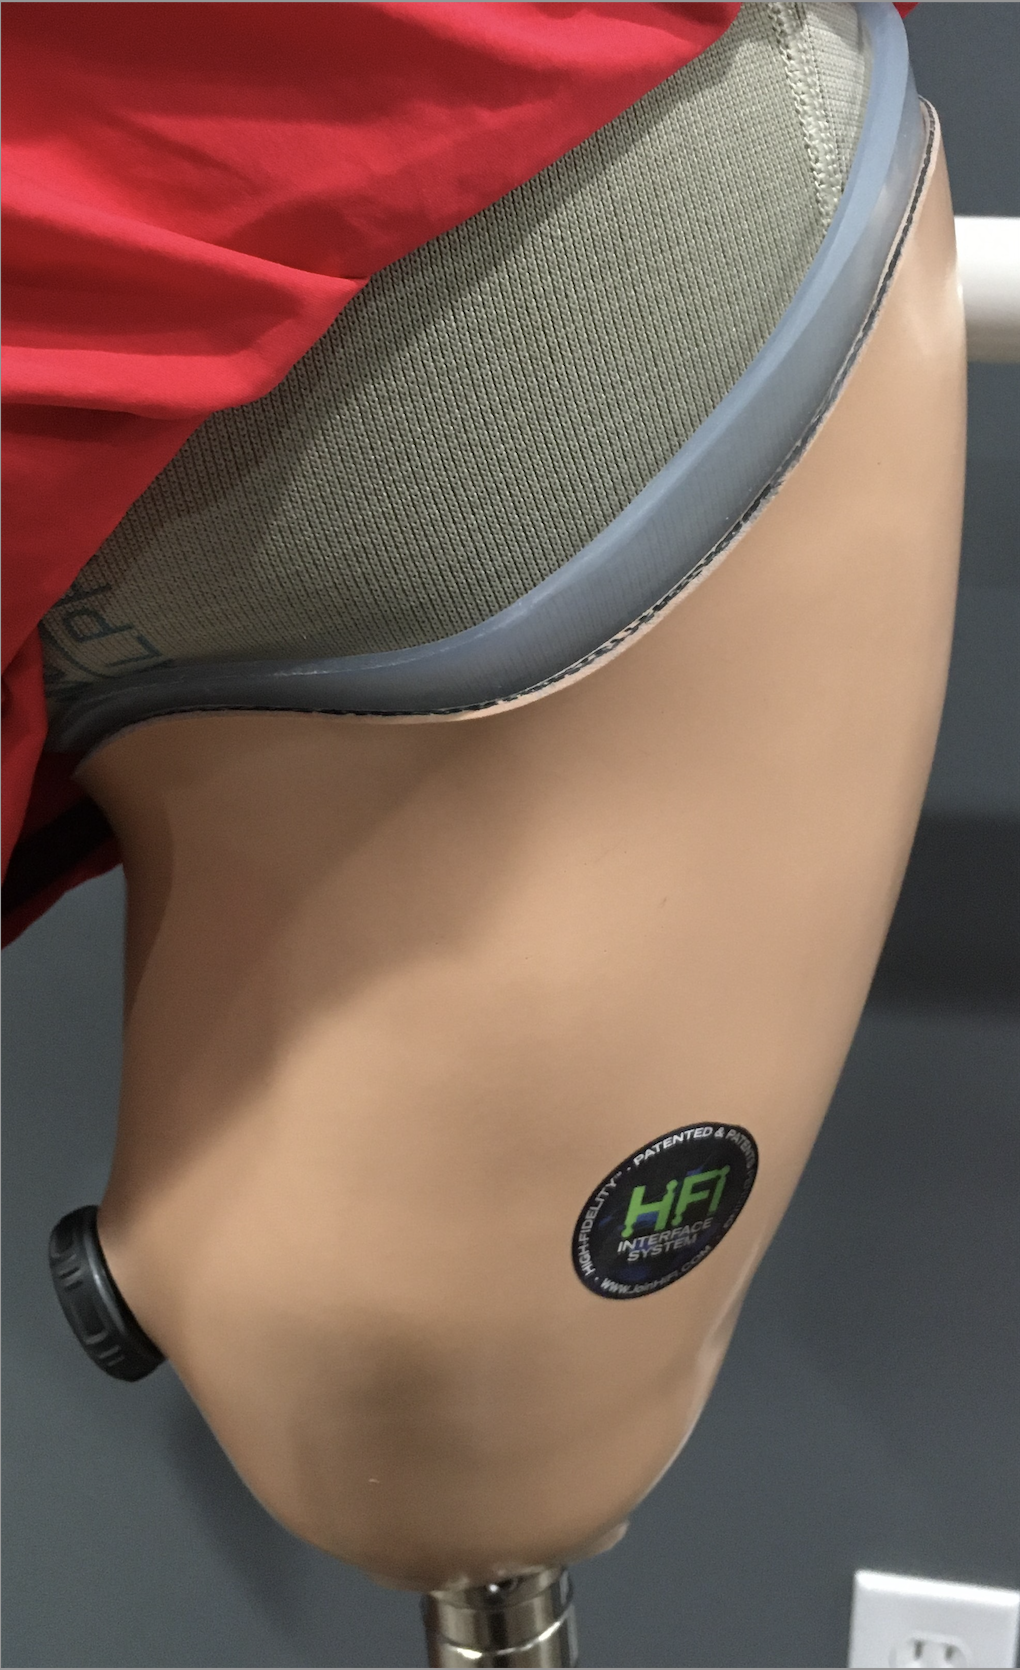 close up of hifi prosthetic leg socket